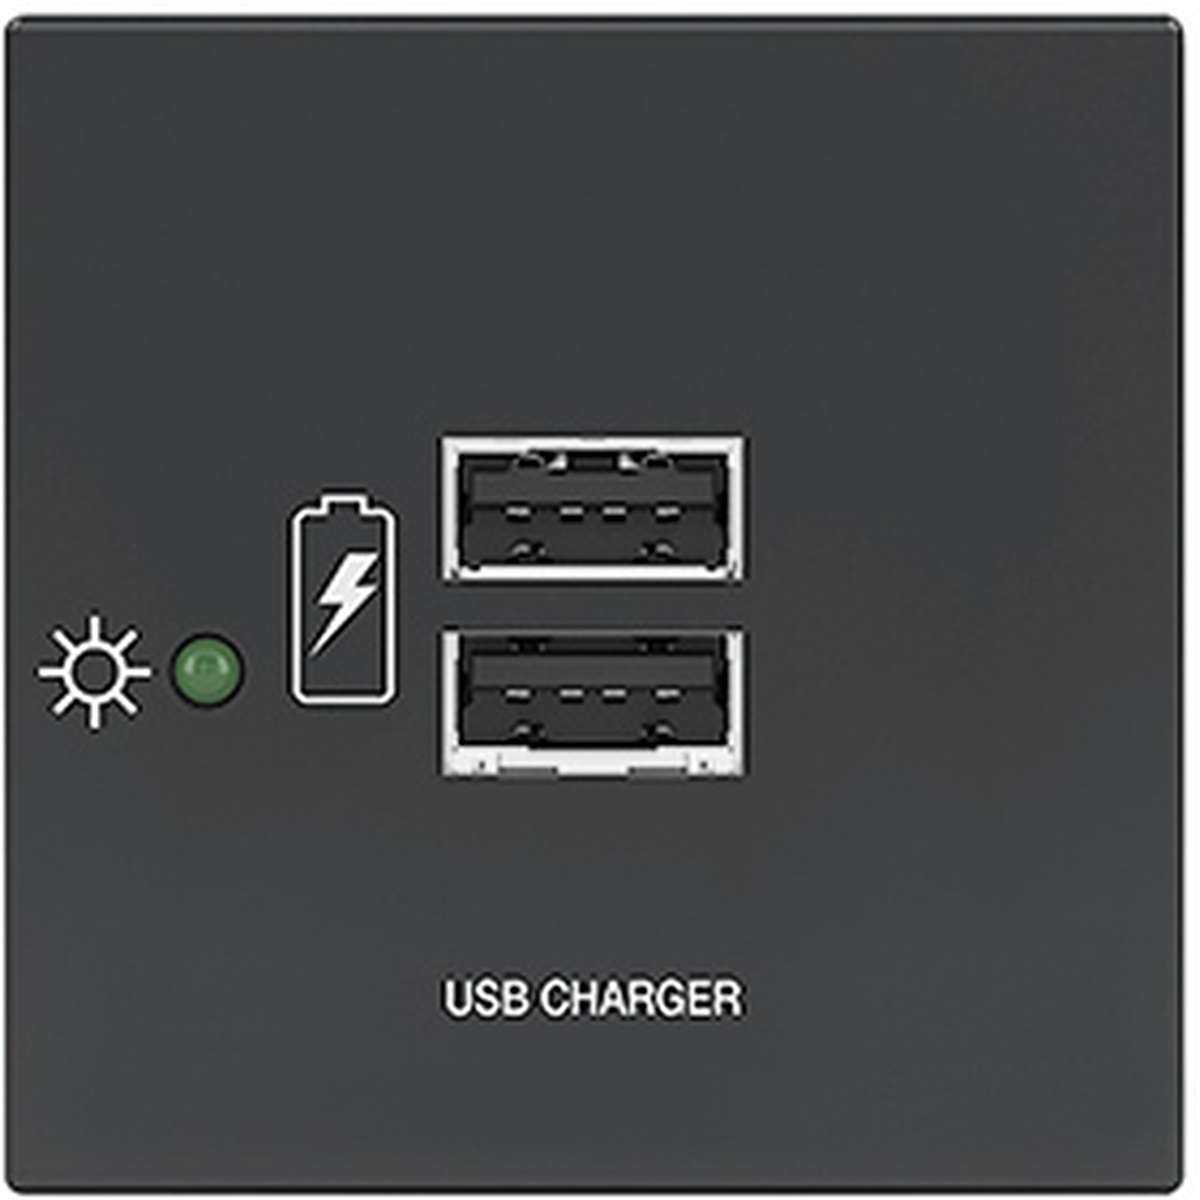 Extron Flex55 USB PowerPlate 102 60-1693-02  product image